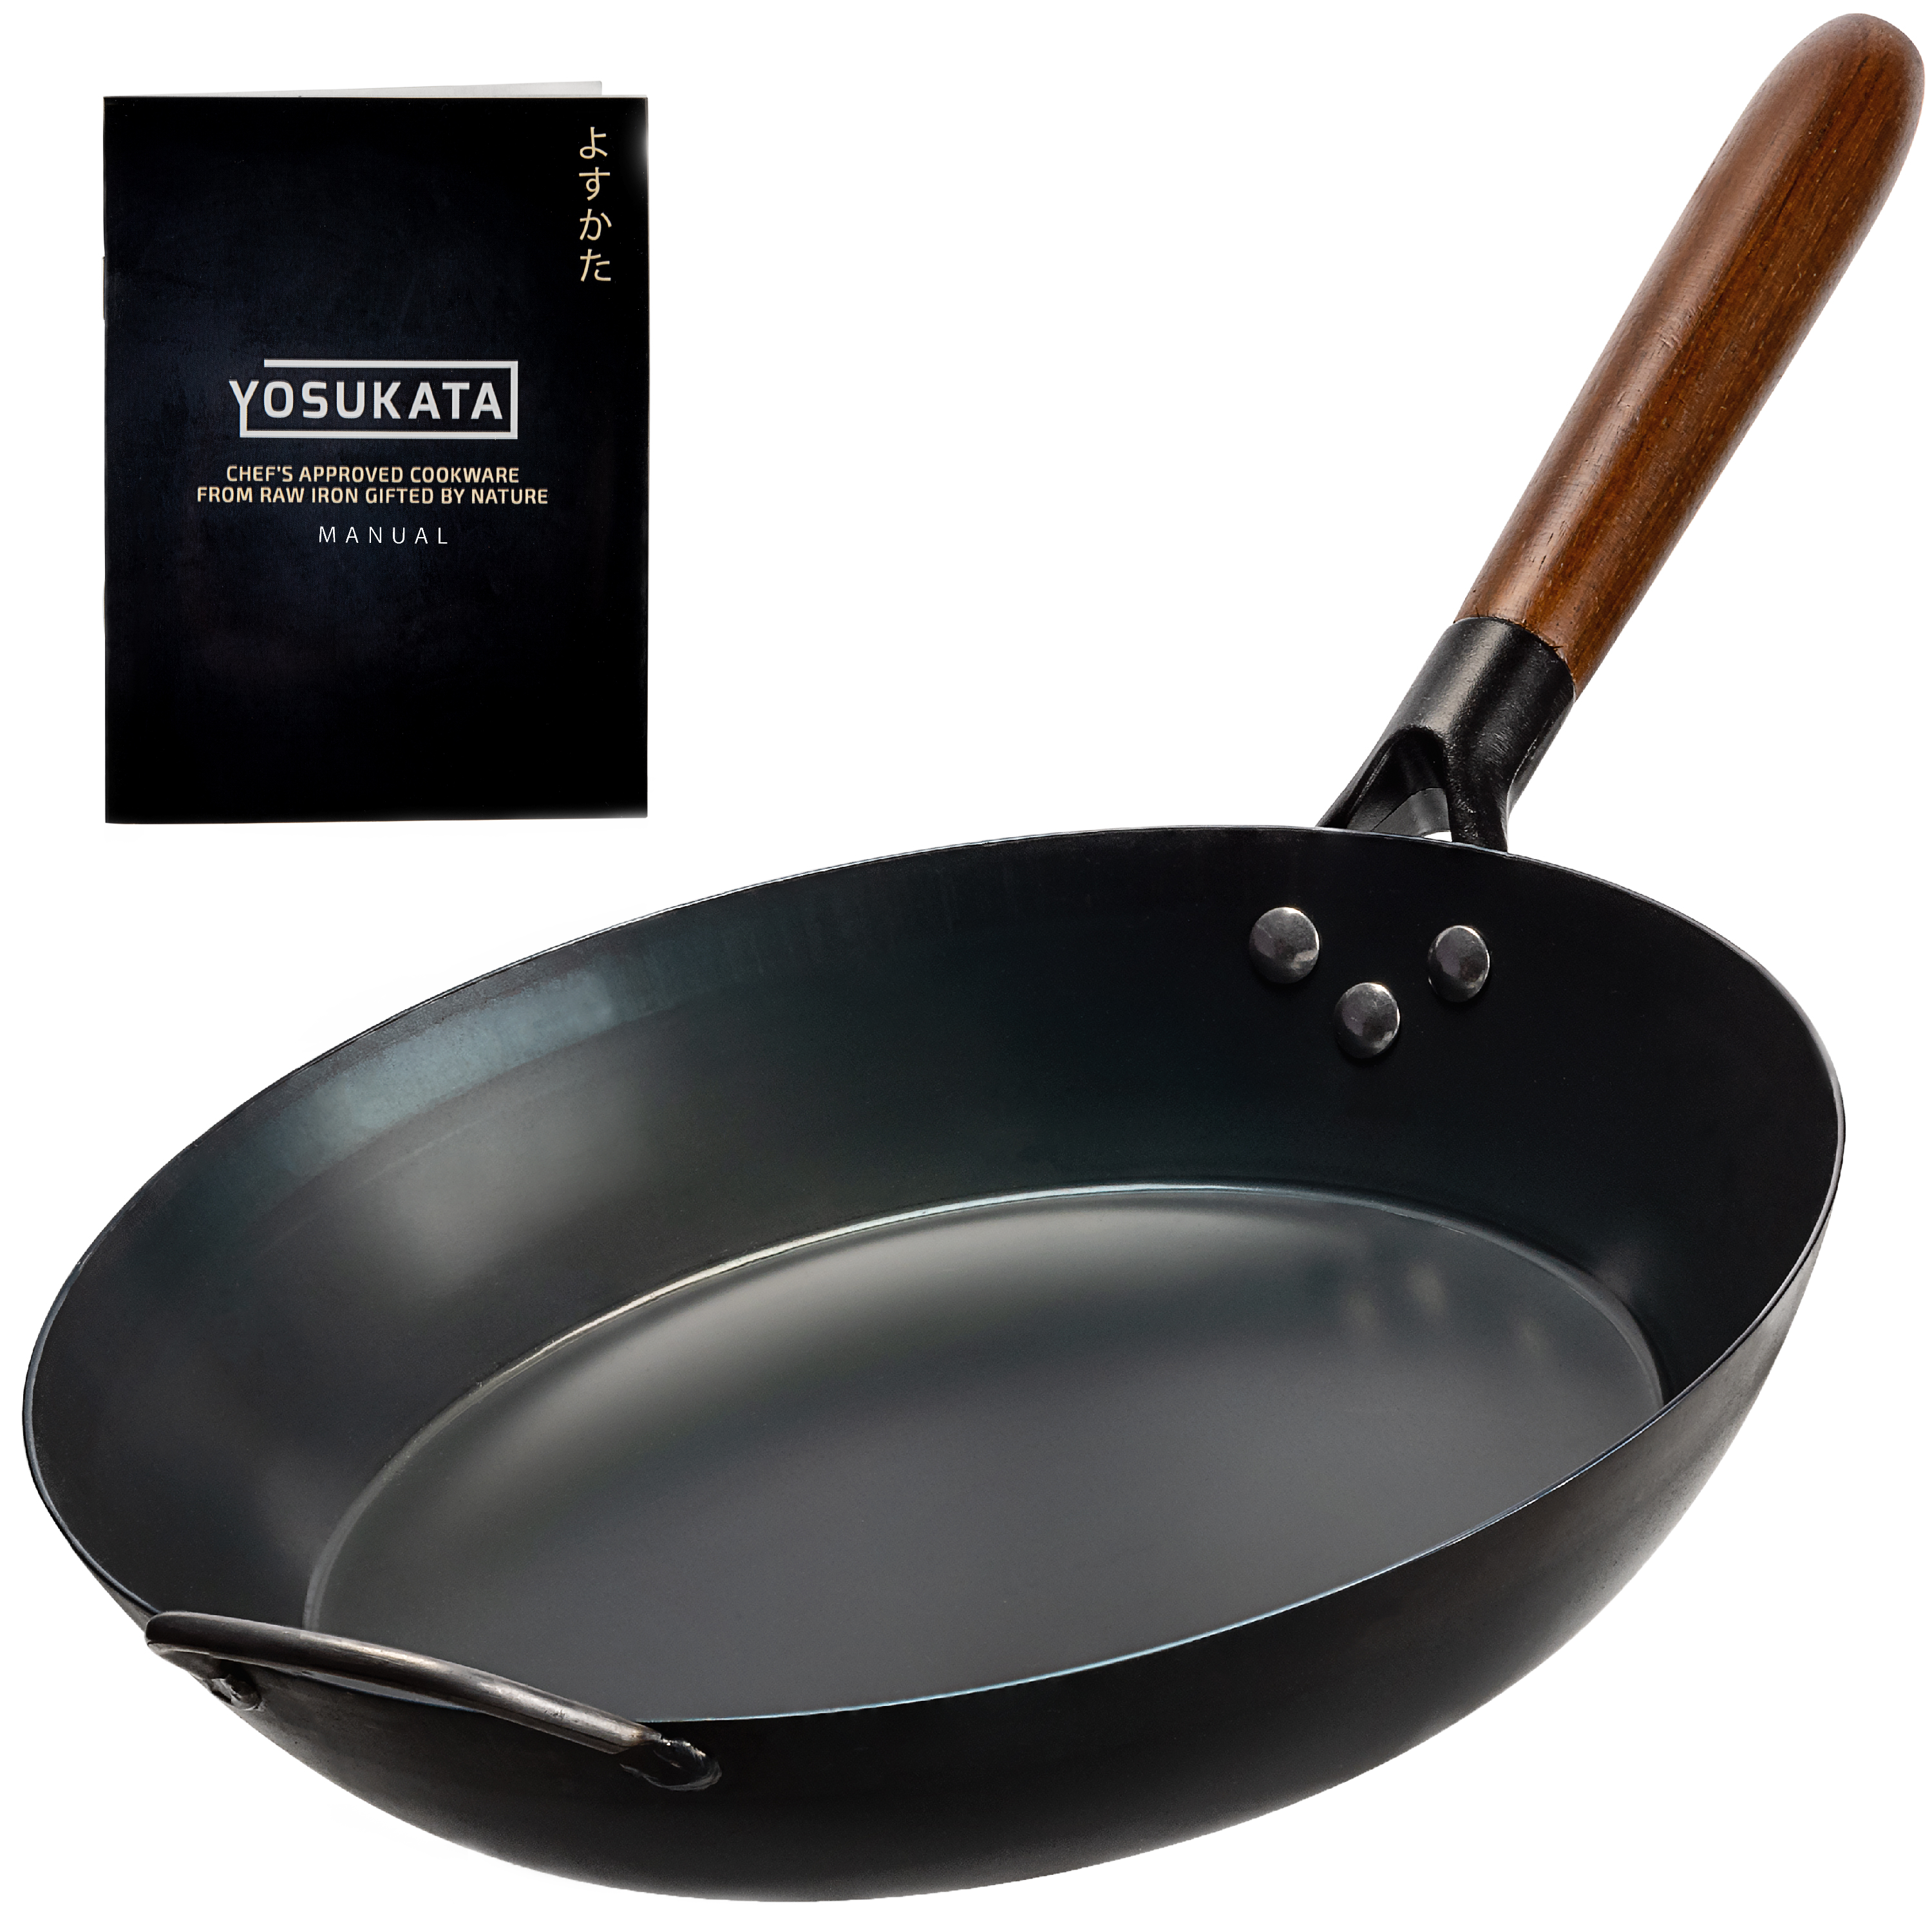 Steelux® Pro Stainless Steel Frying Pan